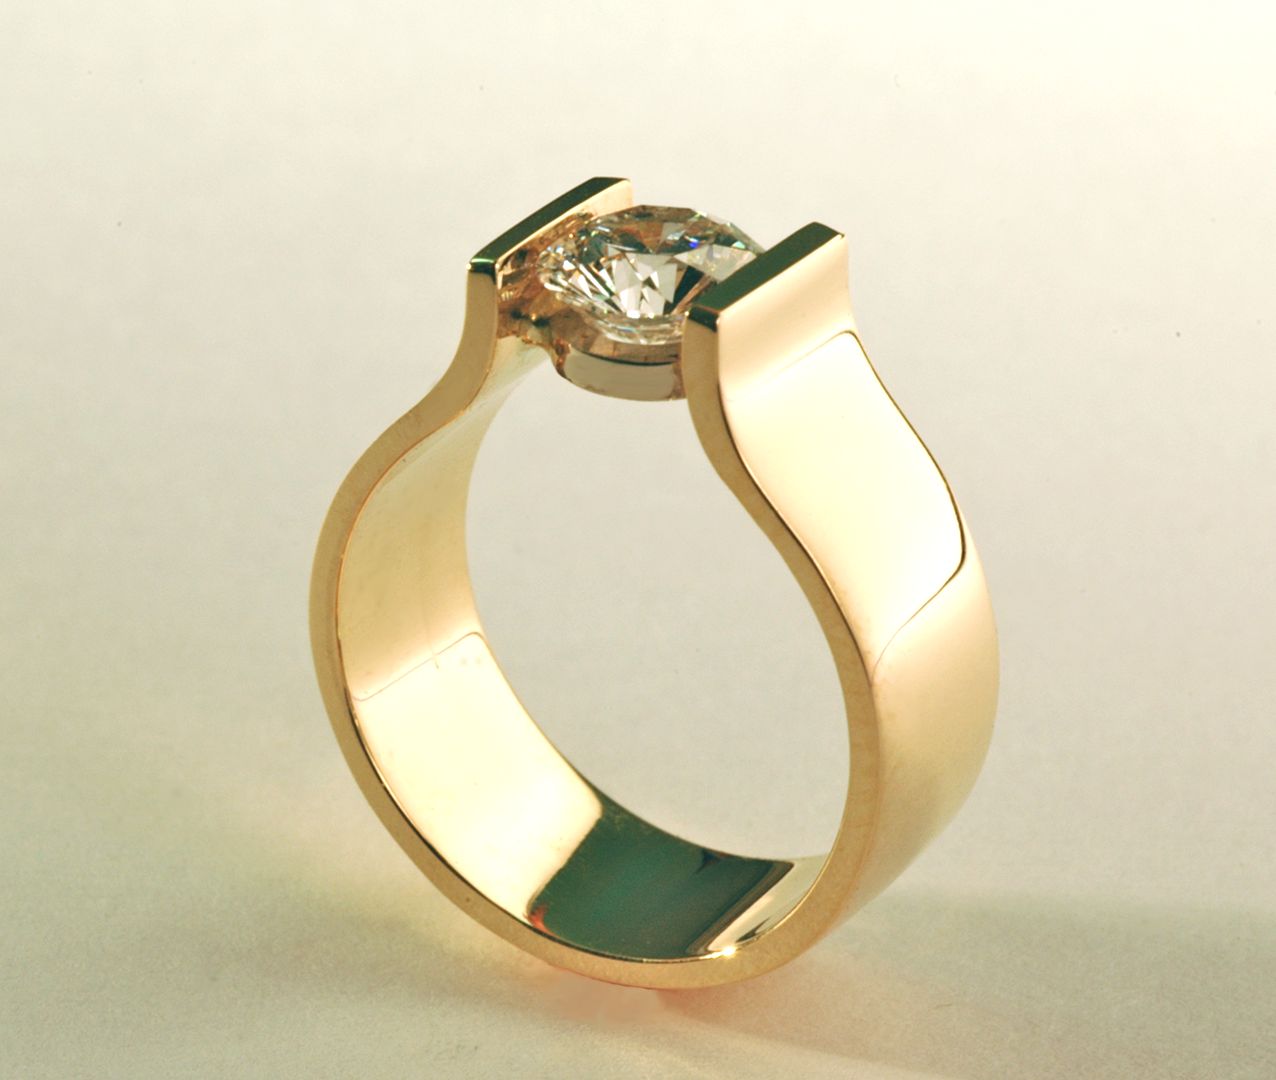 Popular Ring Design: 25 New Gents Engagement Ring Designs